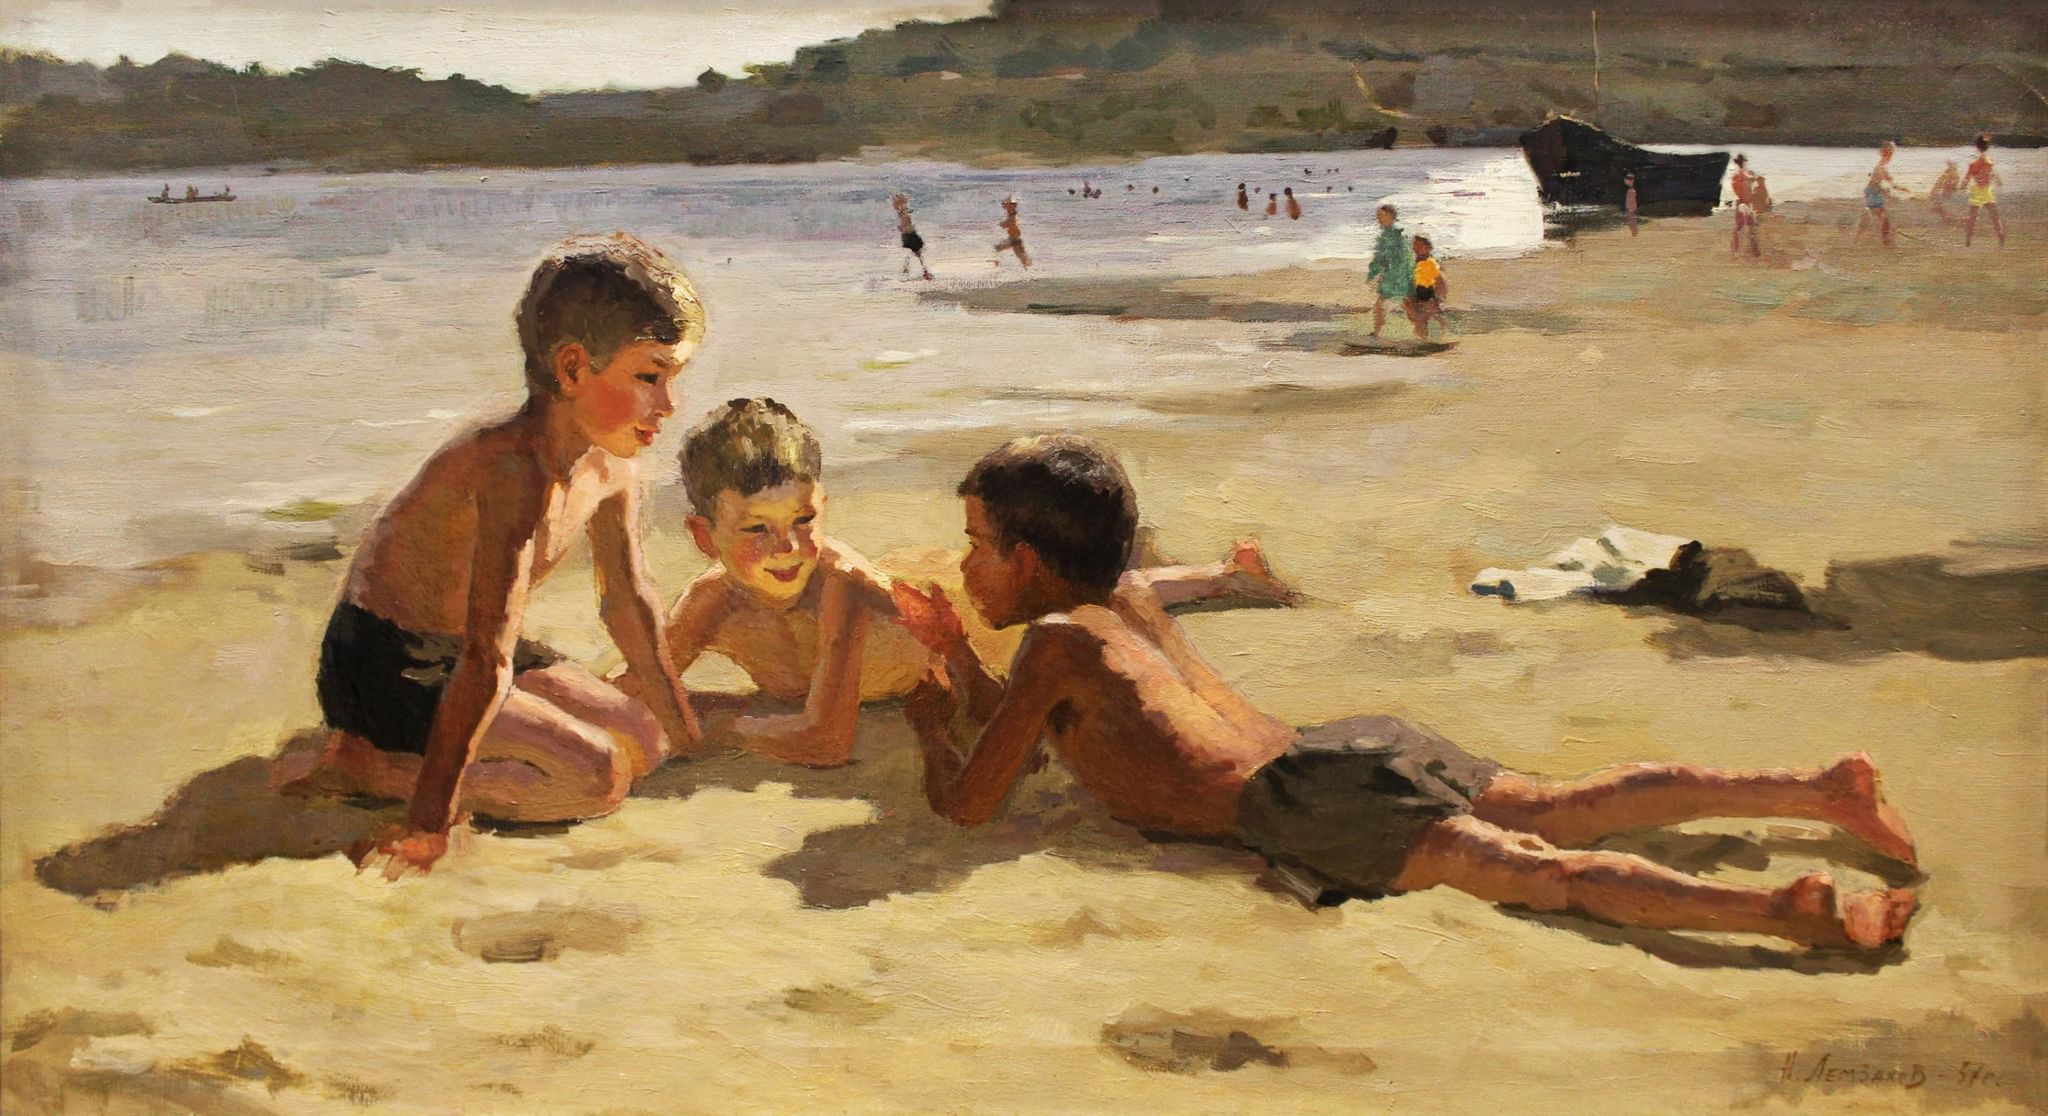 мальчишки на пляже